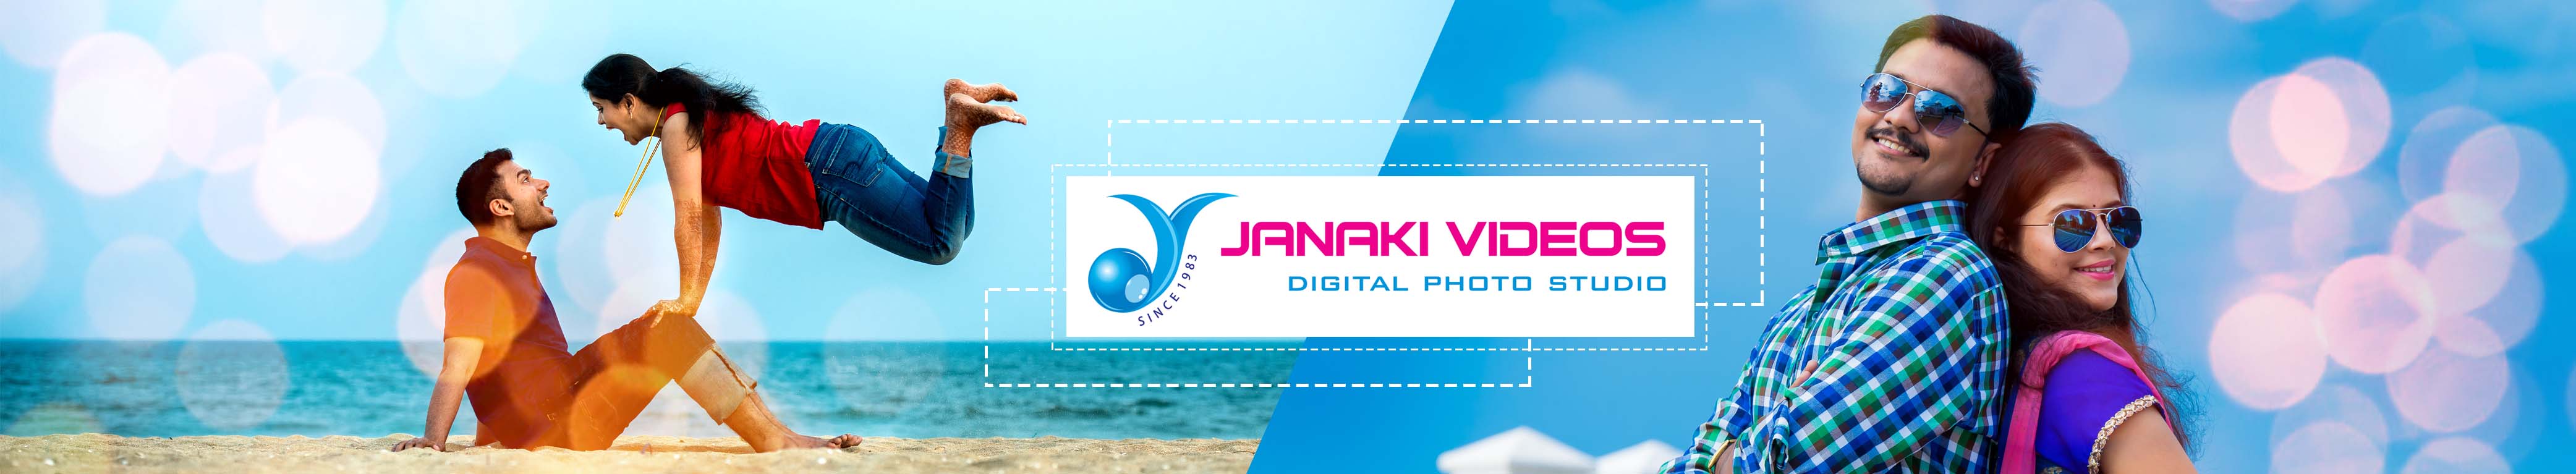 Janaki Videos Banner Image